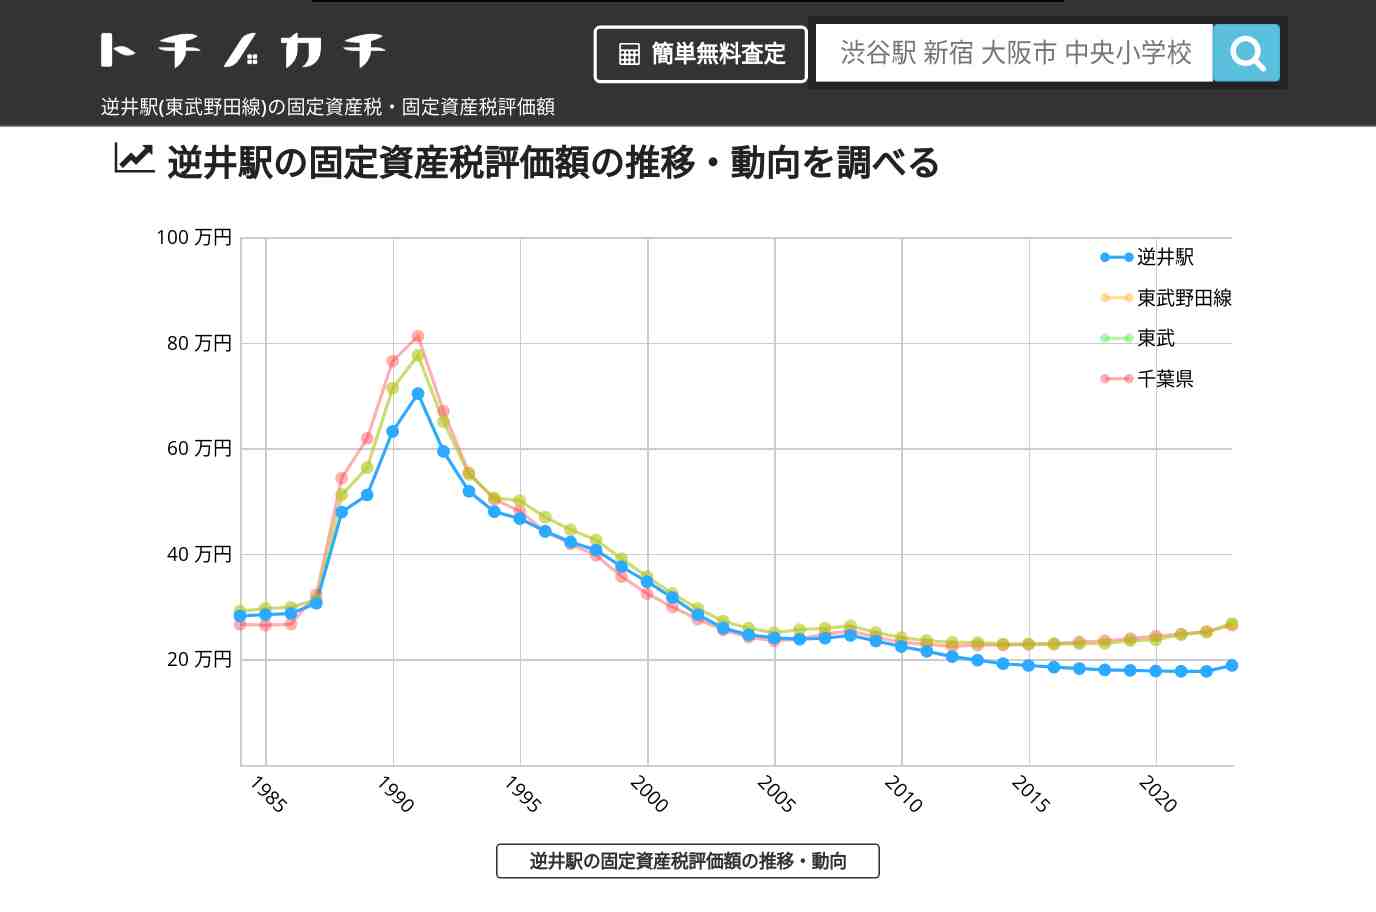 逆井駅(東武野田線)の固定資産税・固定資産税評価額 | トチノカチ